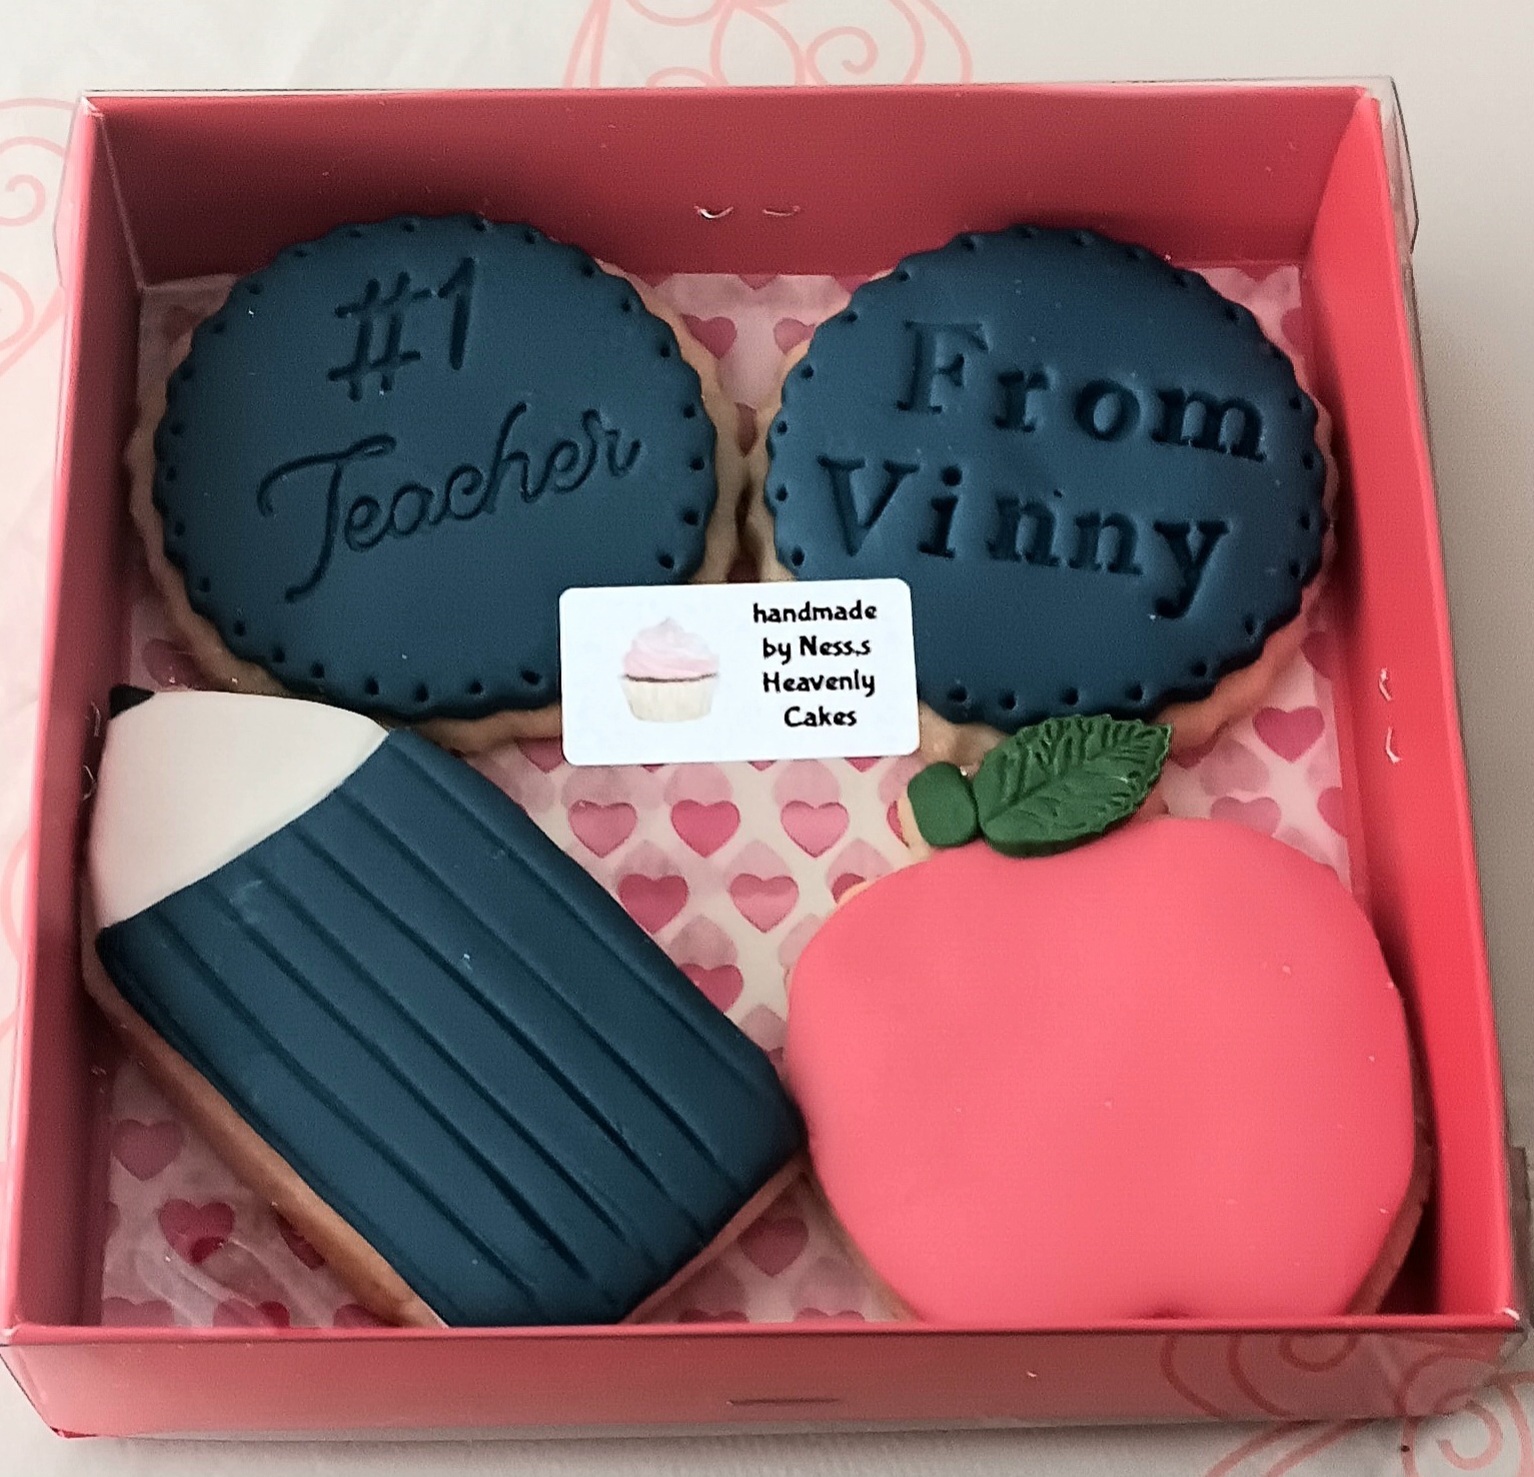 "Thank you teacher" blue cookie box